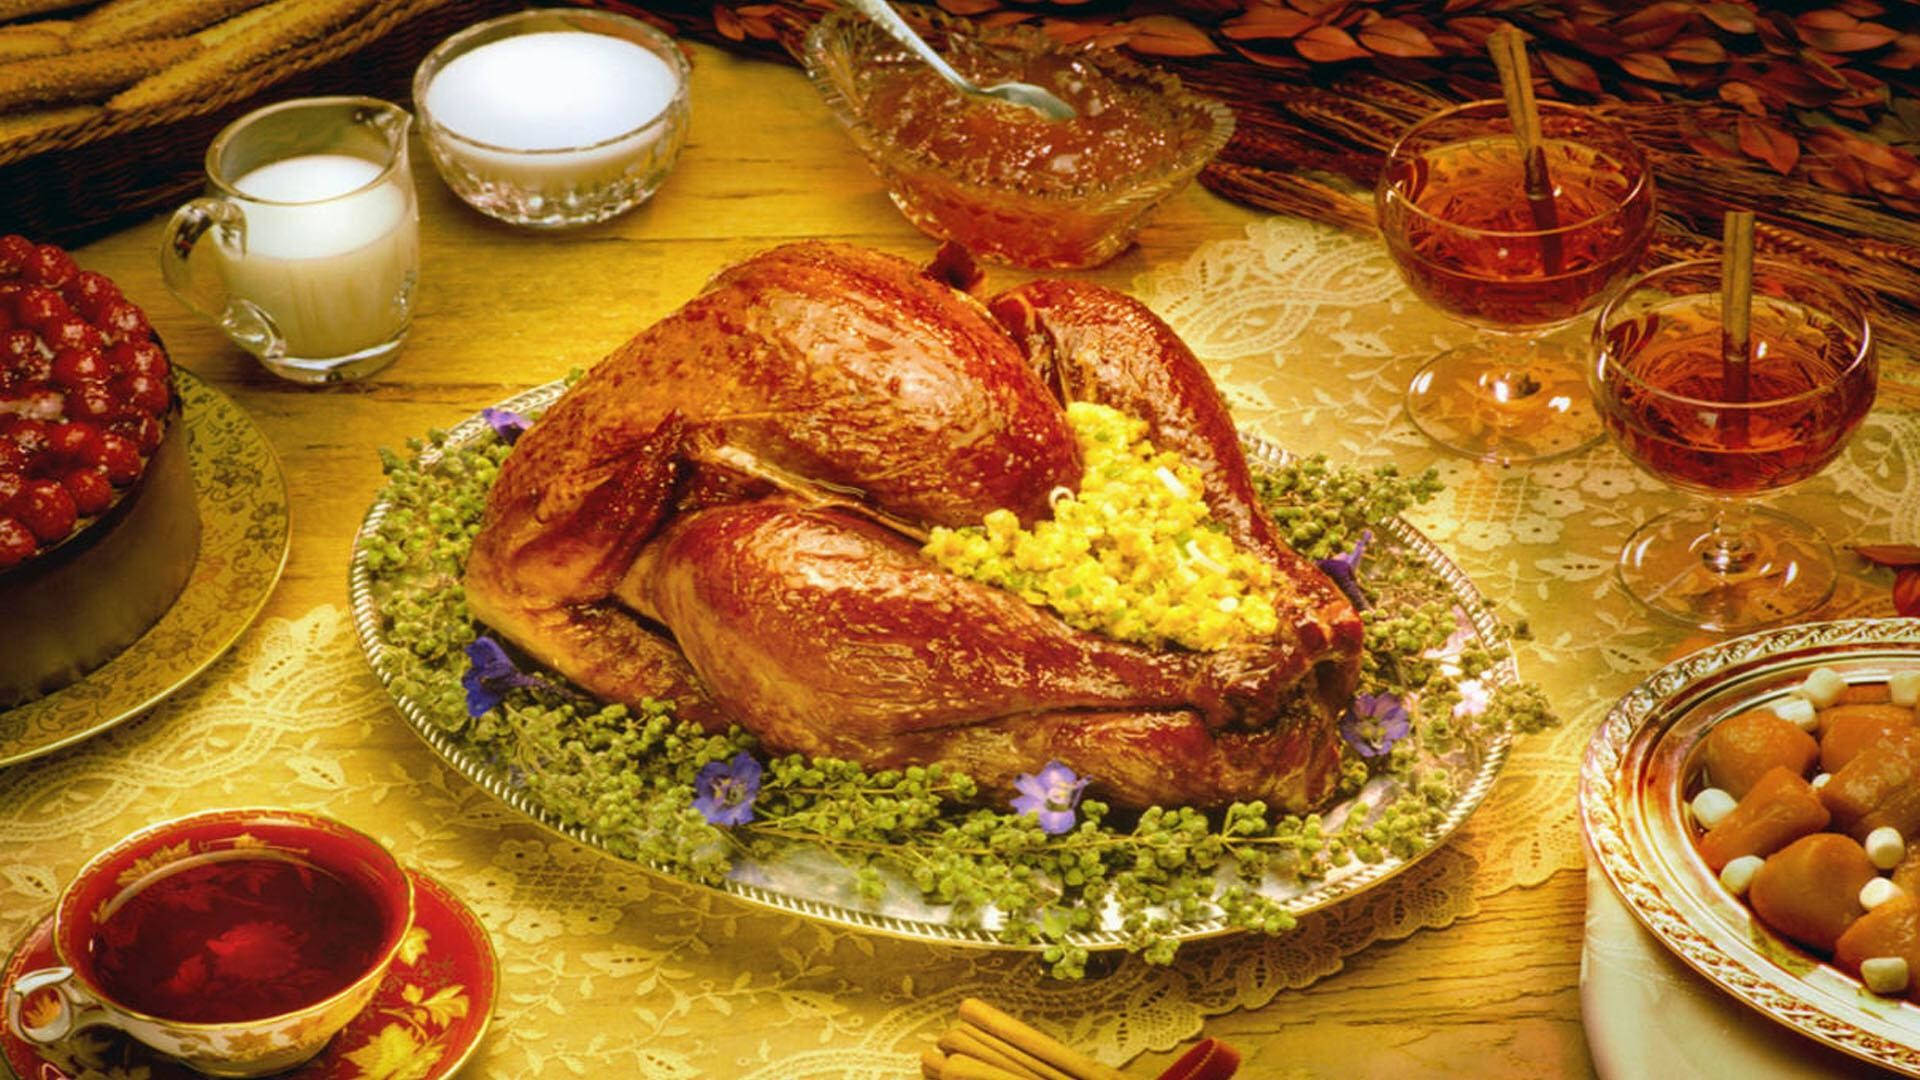 Roasted Turkey For A Thanksgiving Dinner Wallpaper